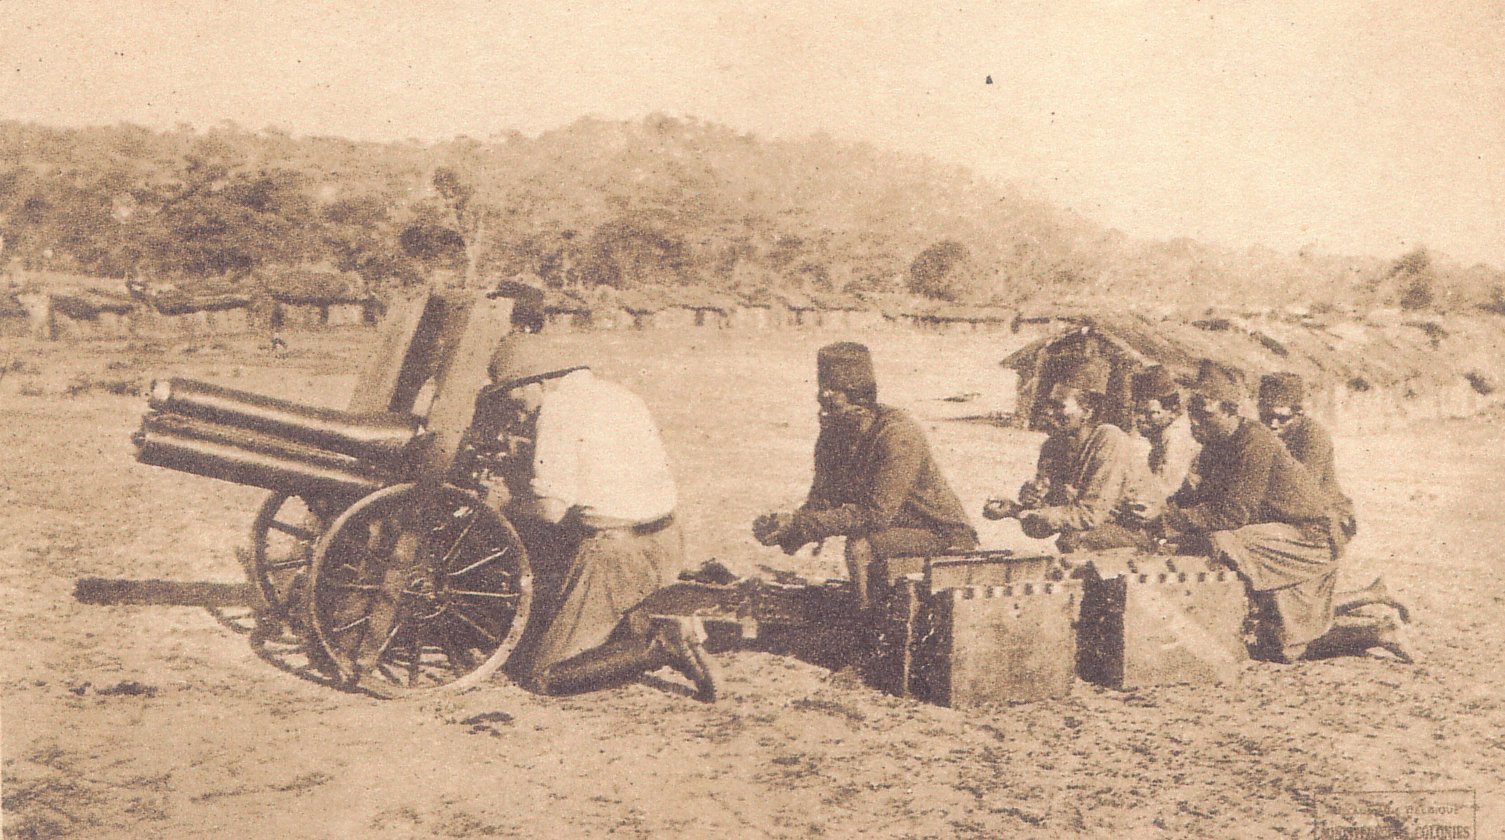 70mm St. Chamond in the Belgium Congo